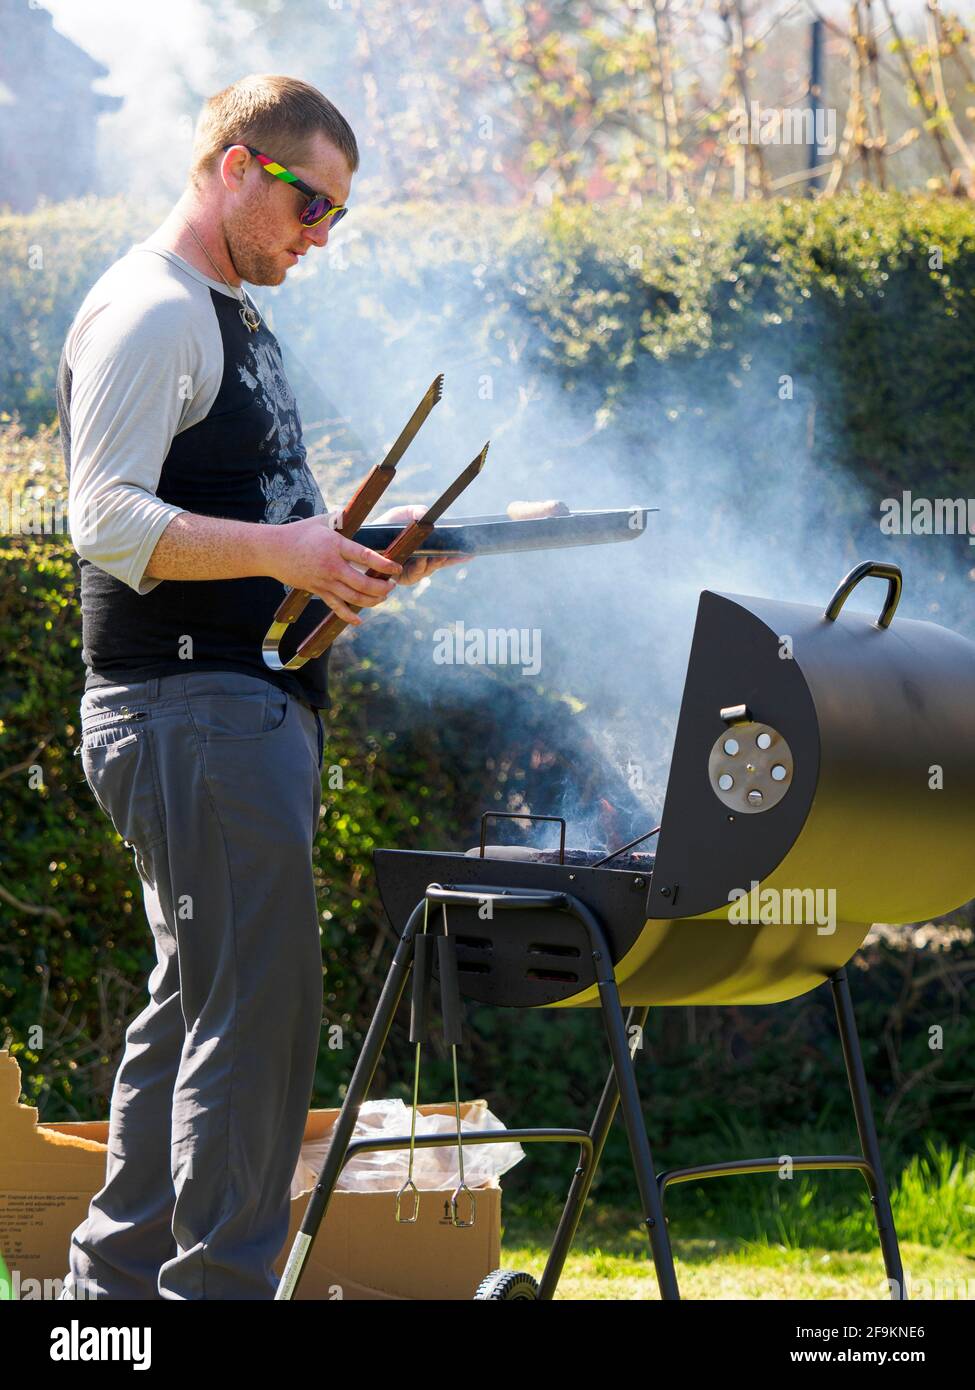 Homme cuisinant sur un barbecue, Cornwall, Royaume-Uni Banque D'Images